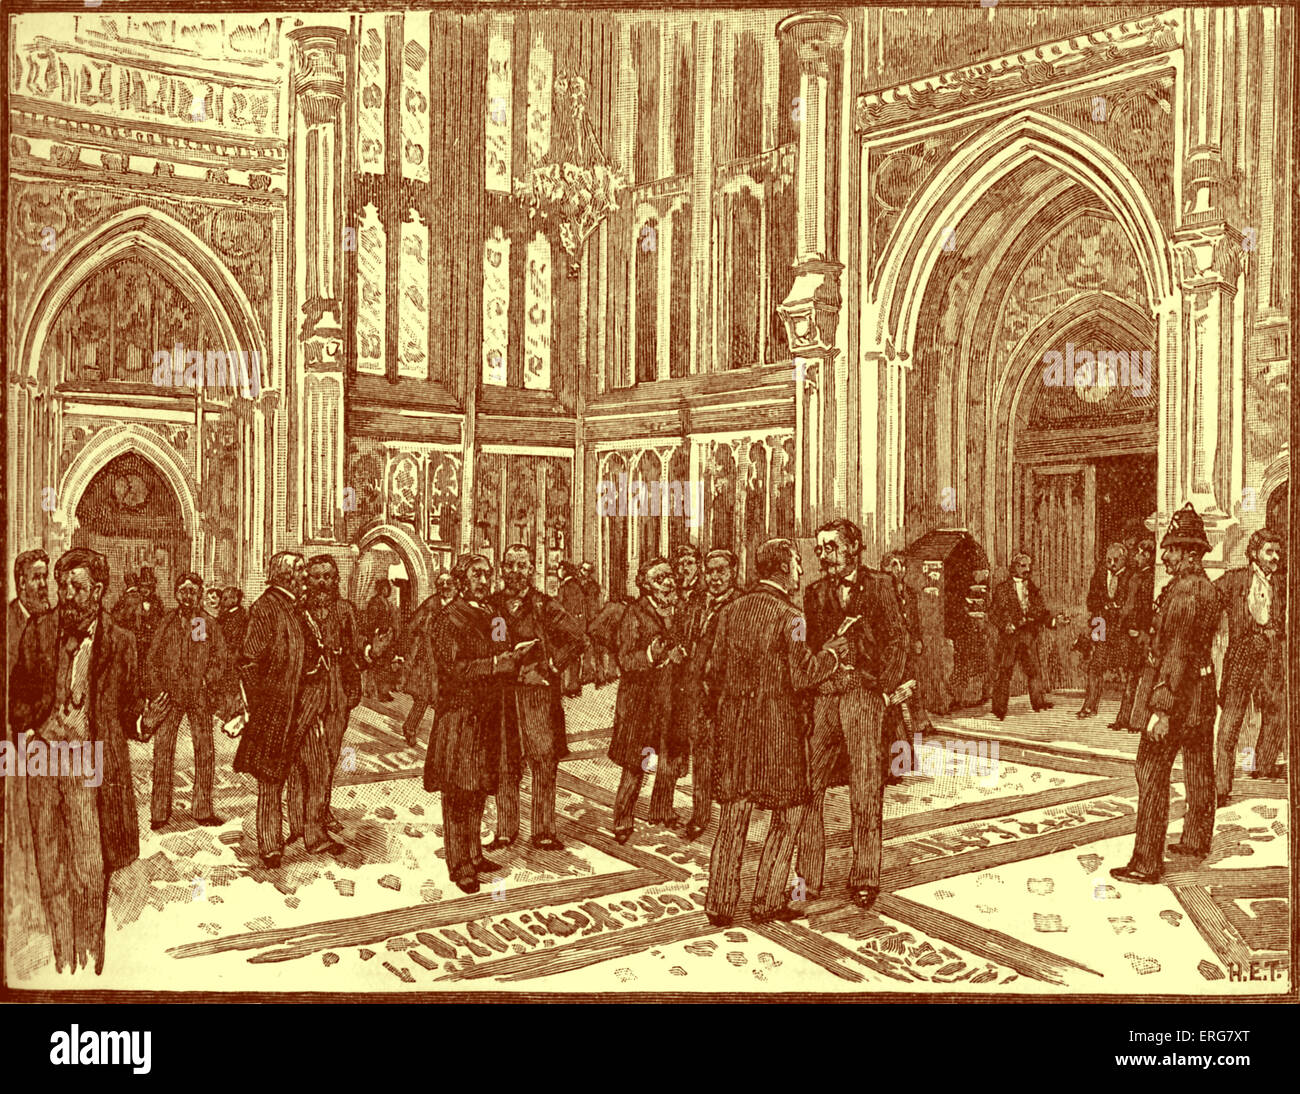 Members'  Lobby, House of Commons, Parliament, London, UK, c. 1887. Stock Photo